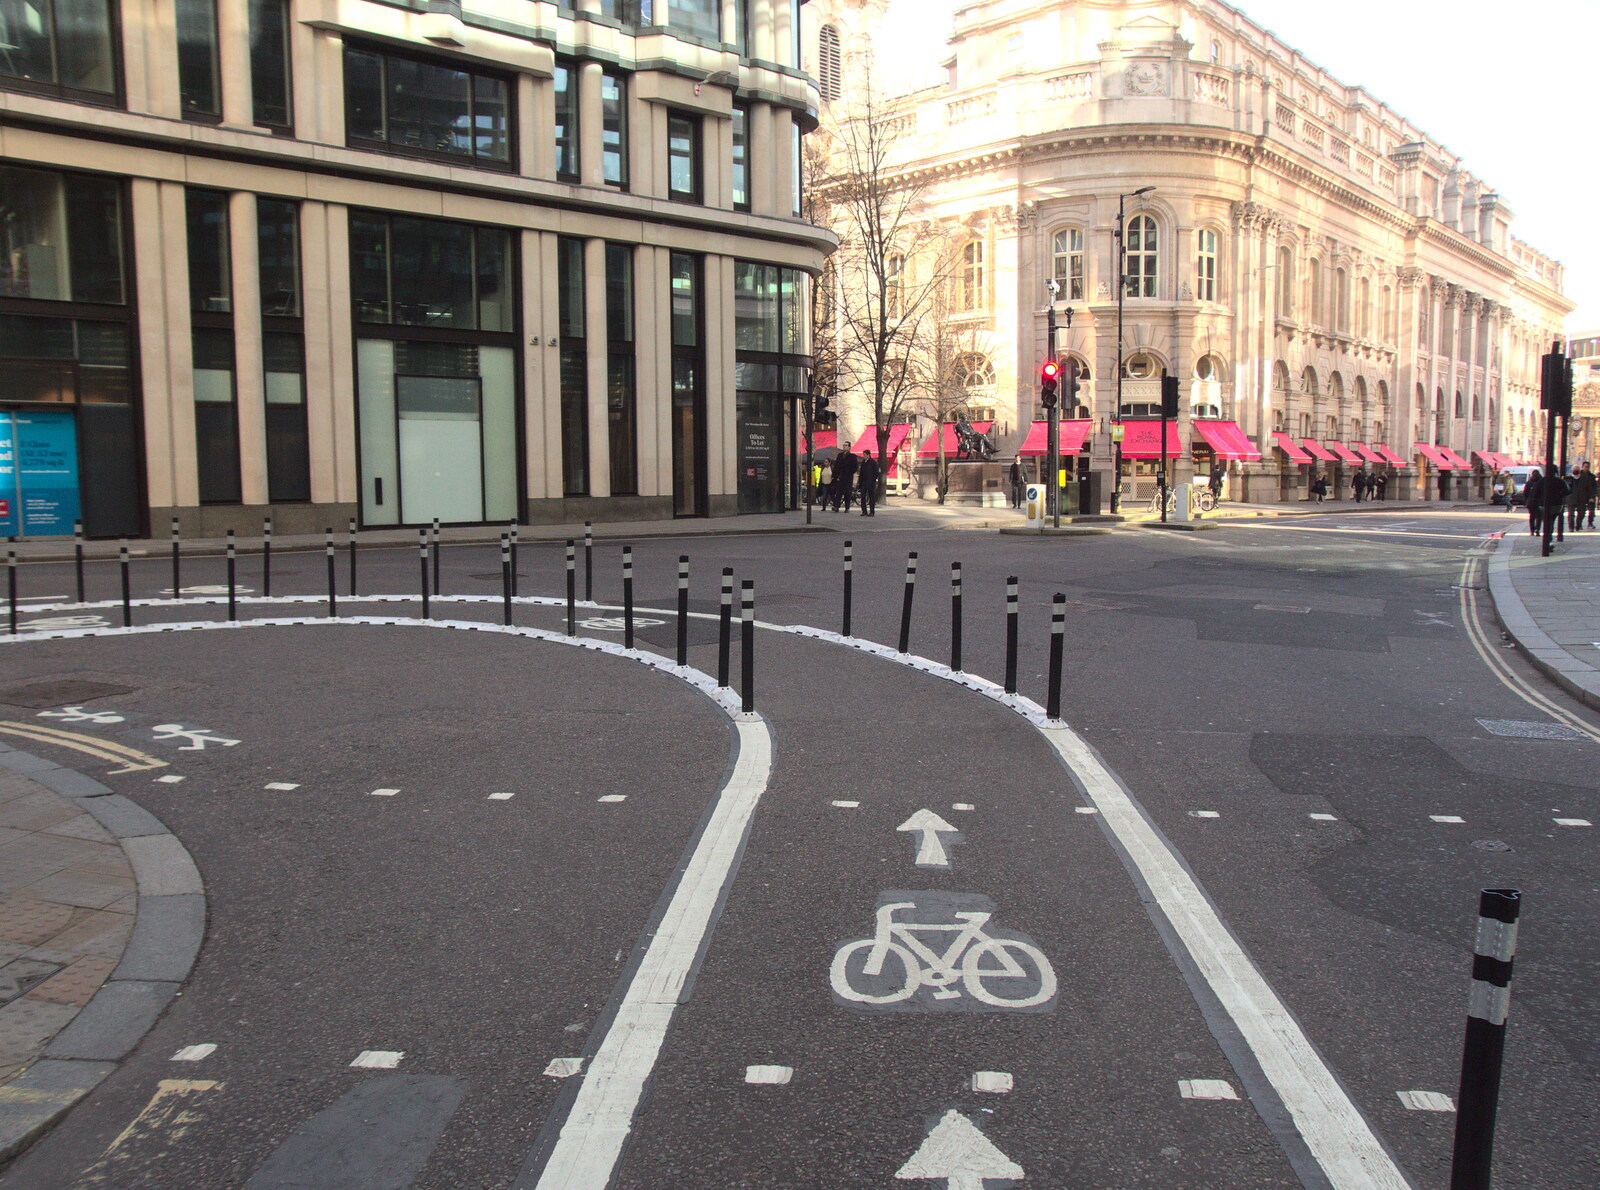 The new bike lane meets Threadneedle Street from The Last Trip to the SwiftKey Office, Paddington, London - 23rd February 2022